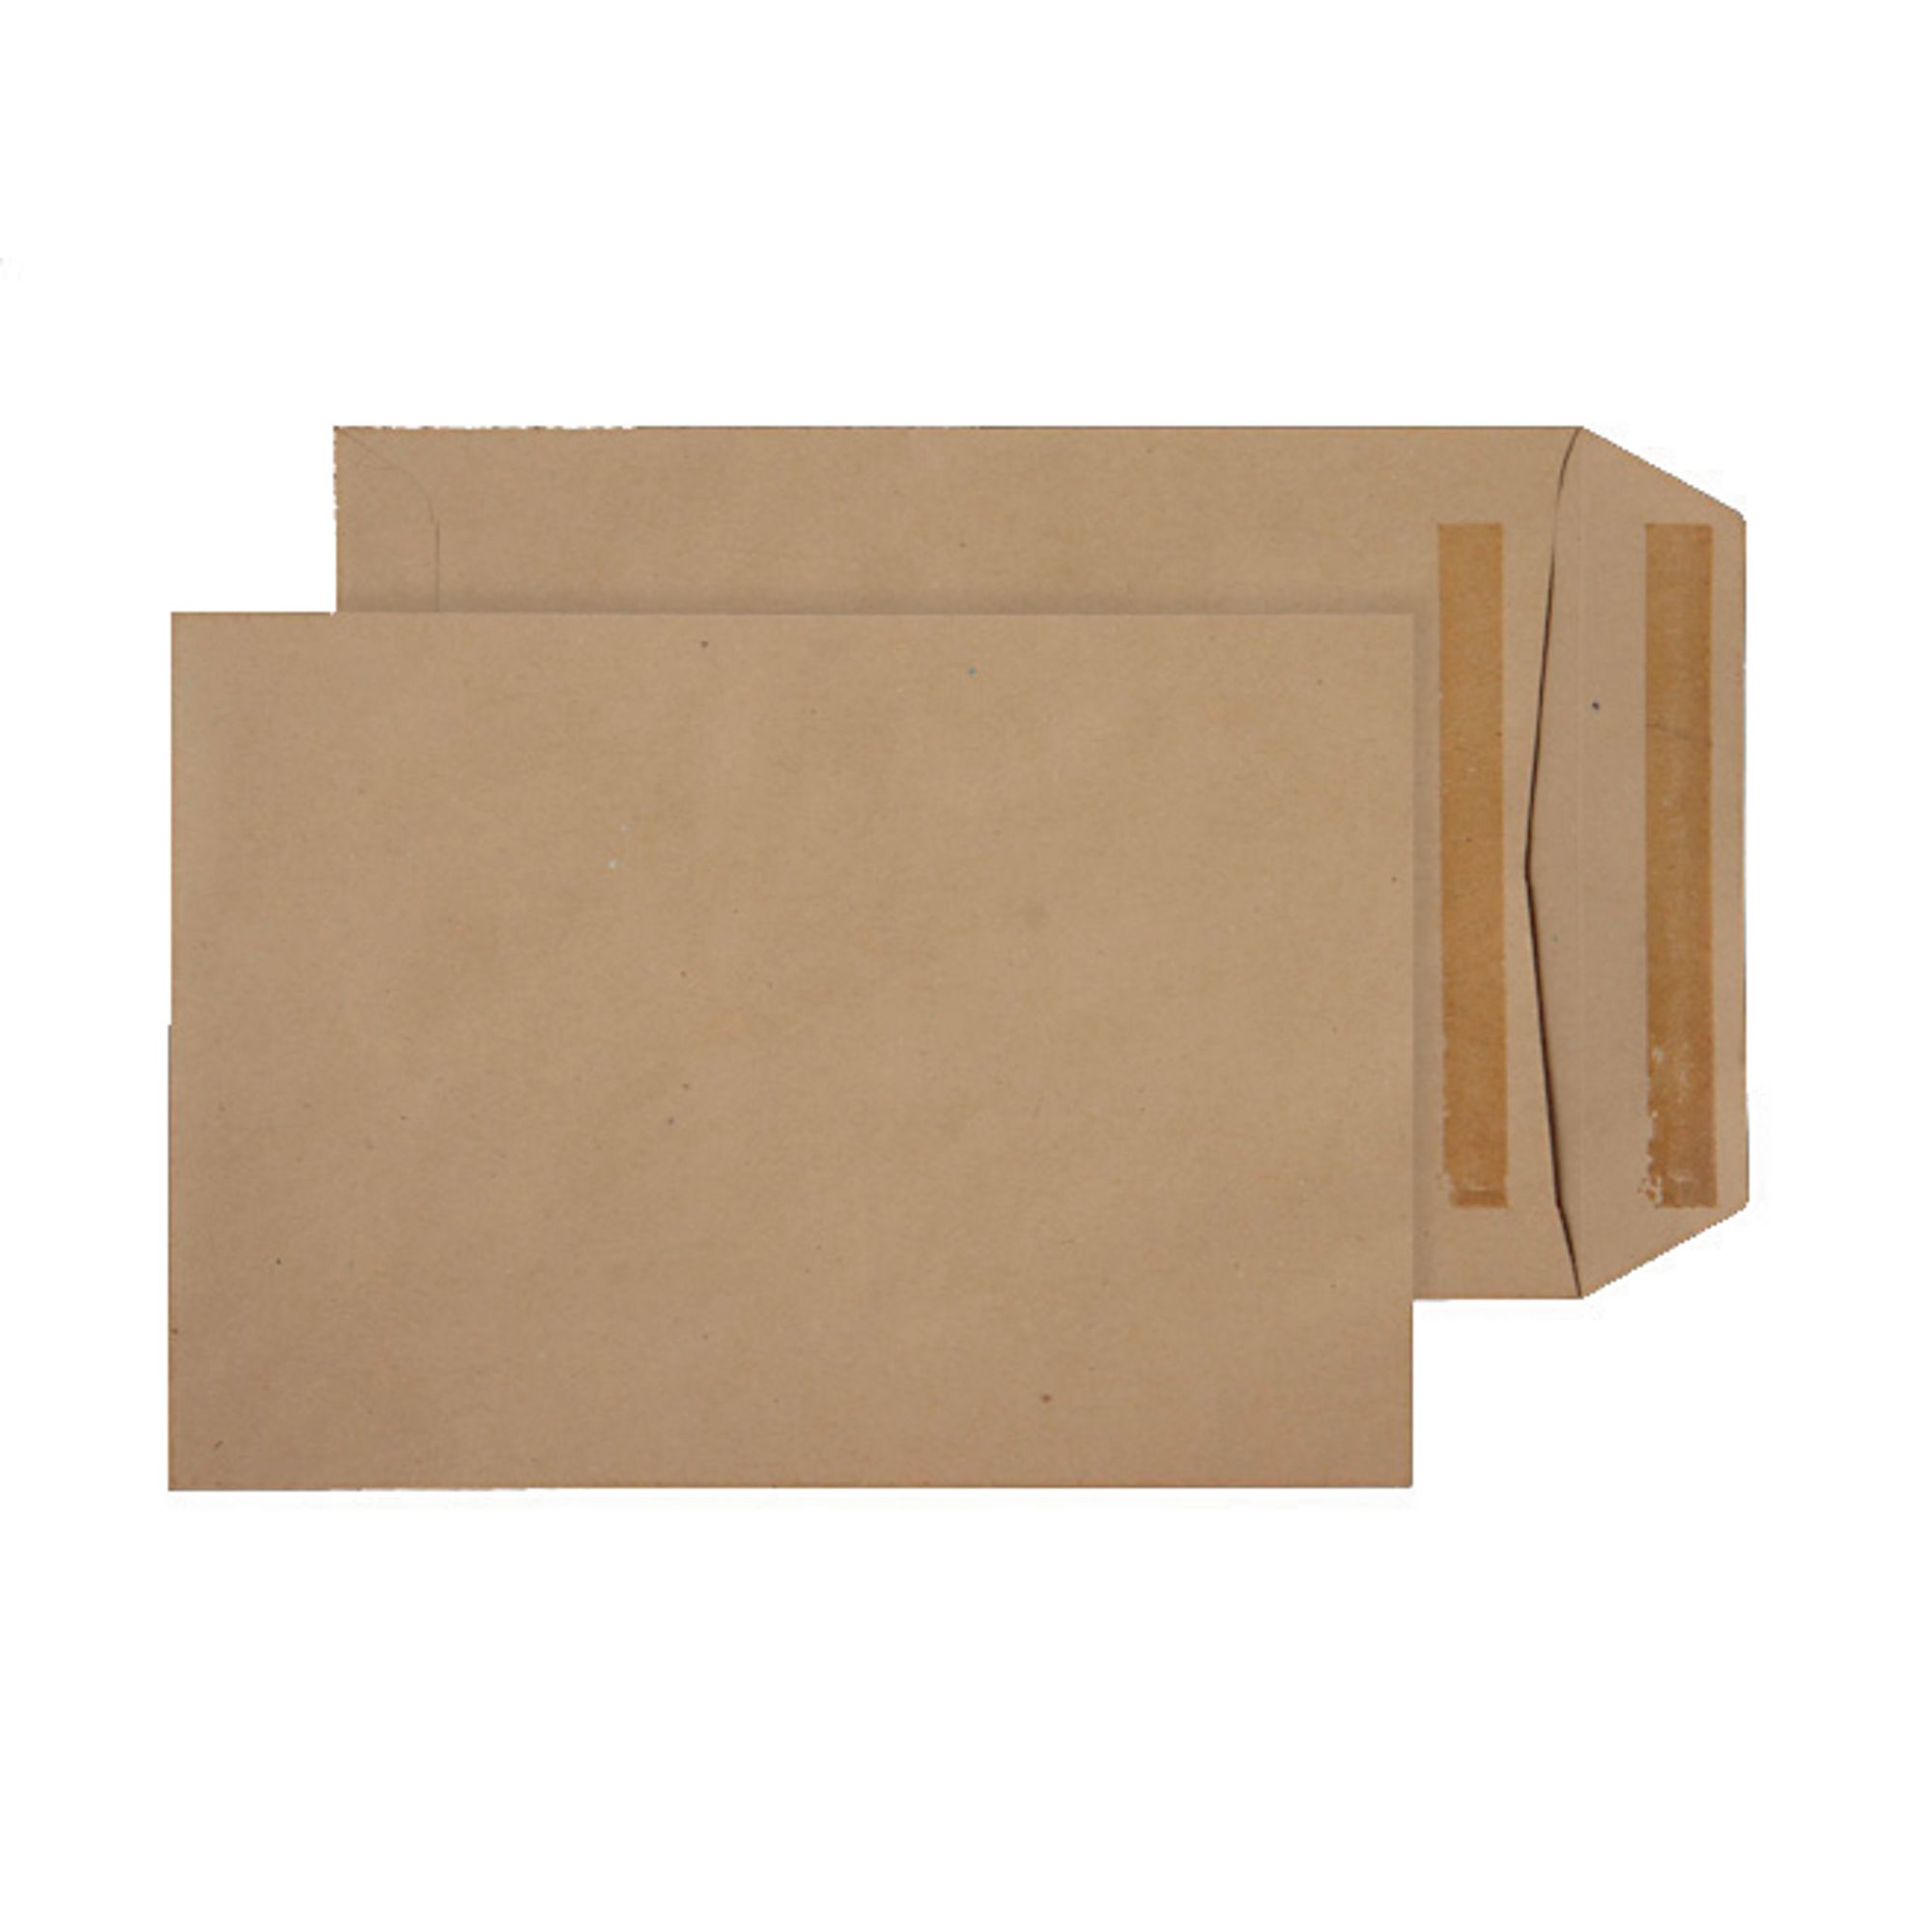 HE378488 - C5 Manilla Buff Self Seal Pocket Envelopes - Box of 500 ...